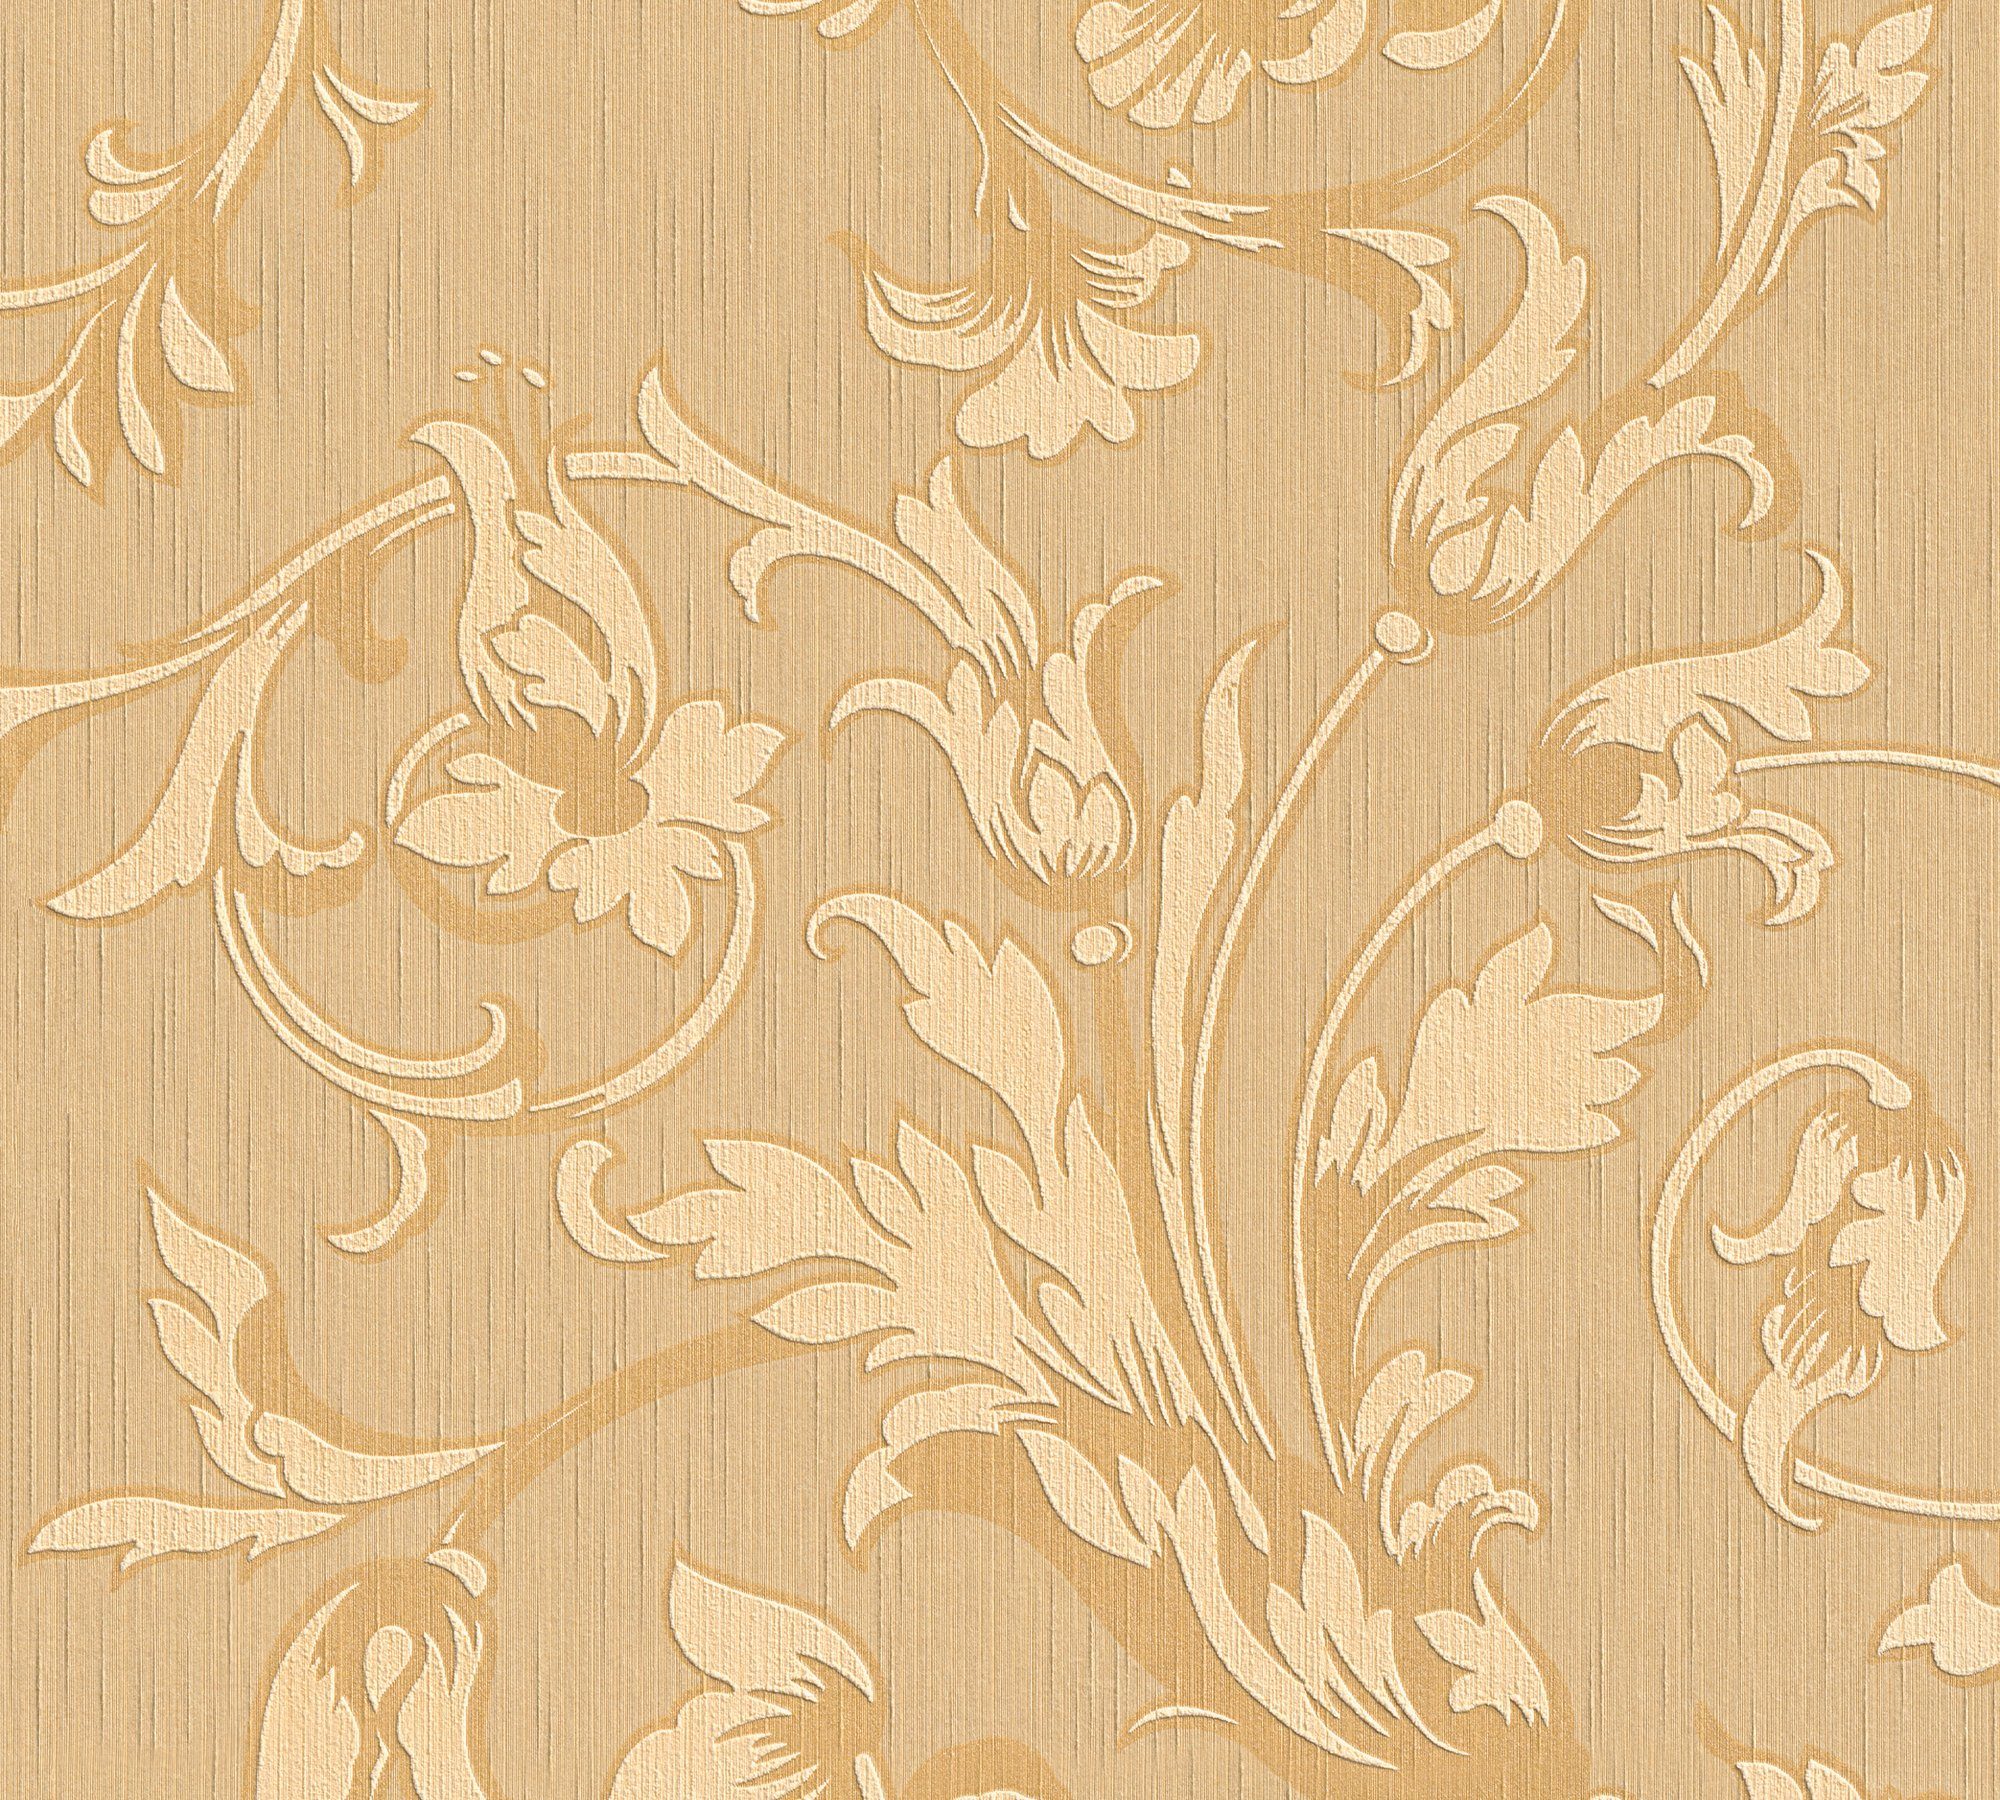 Tapete Architects Floral A.S. Barock, Tessuto, samtig, orange/beige Textiltapete Blumen floral, Paper Création